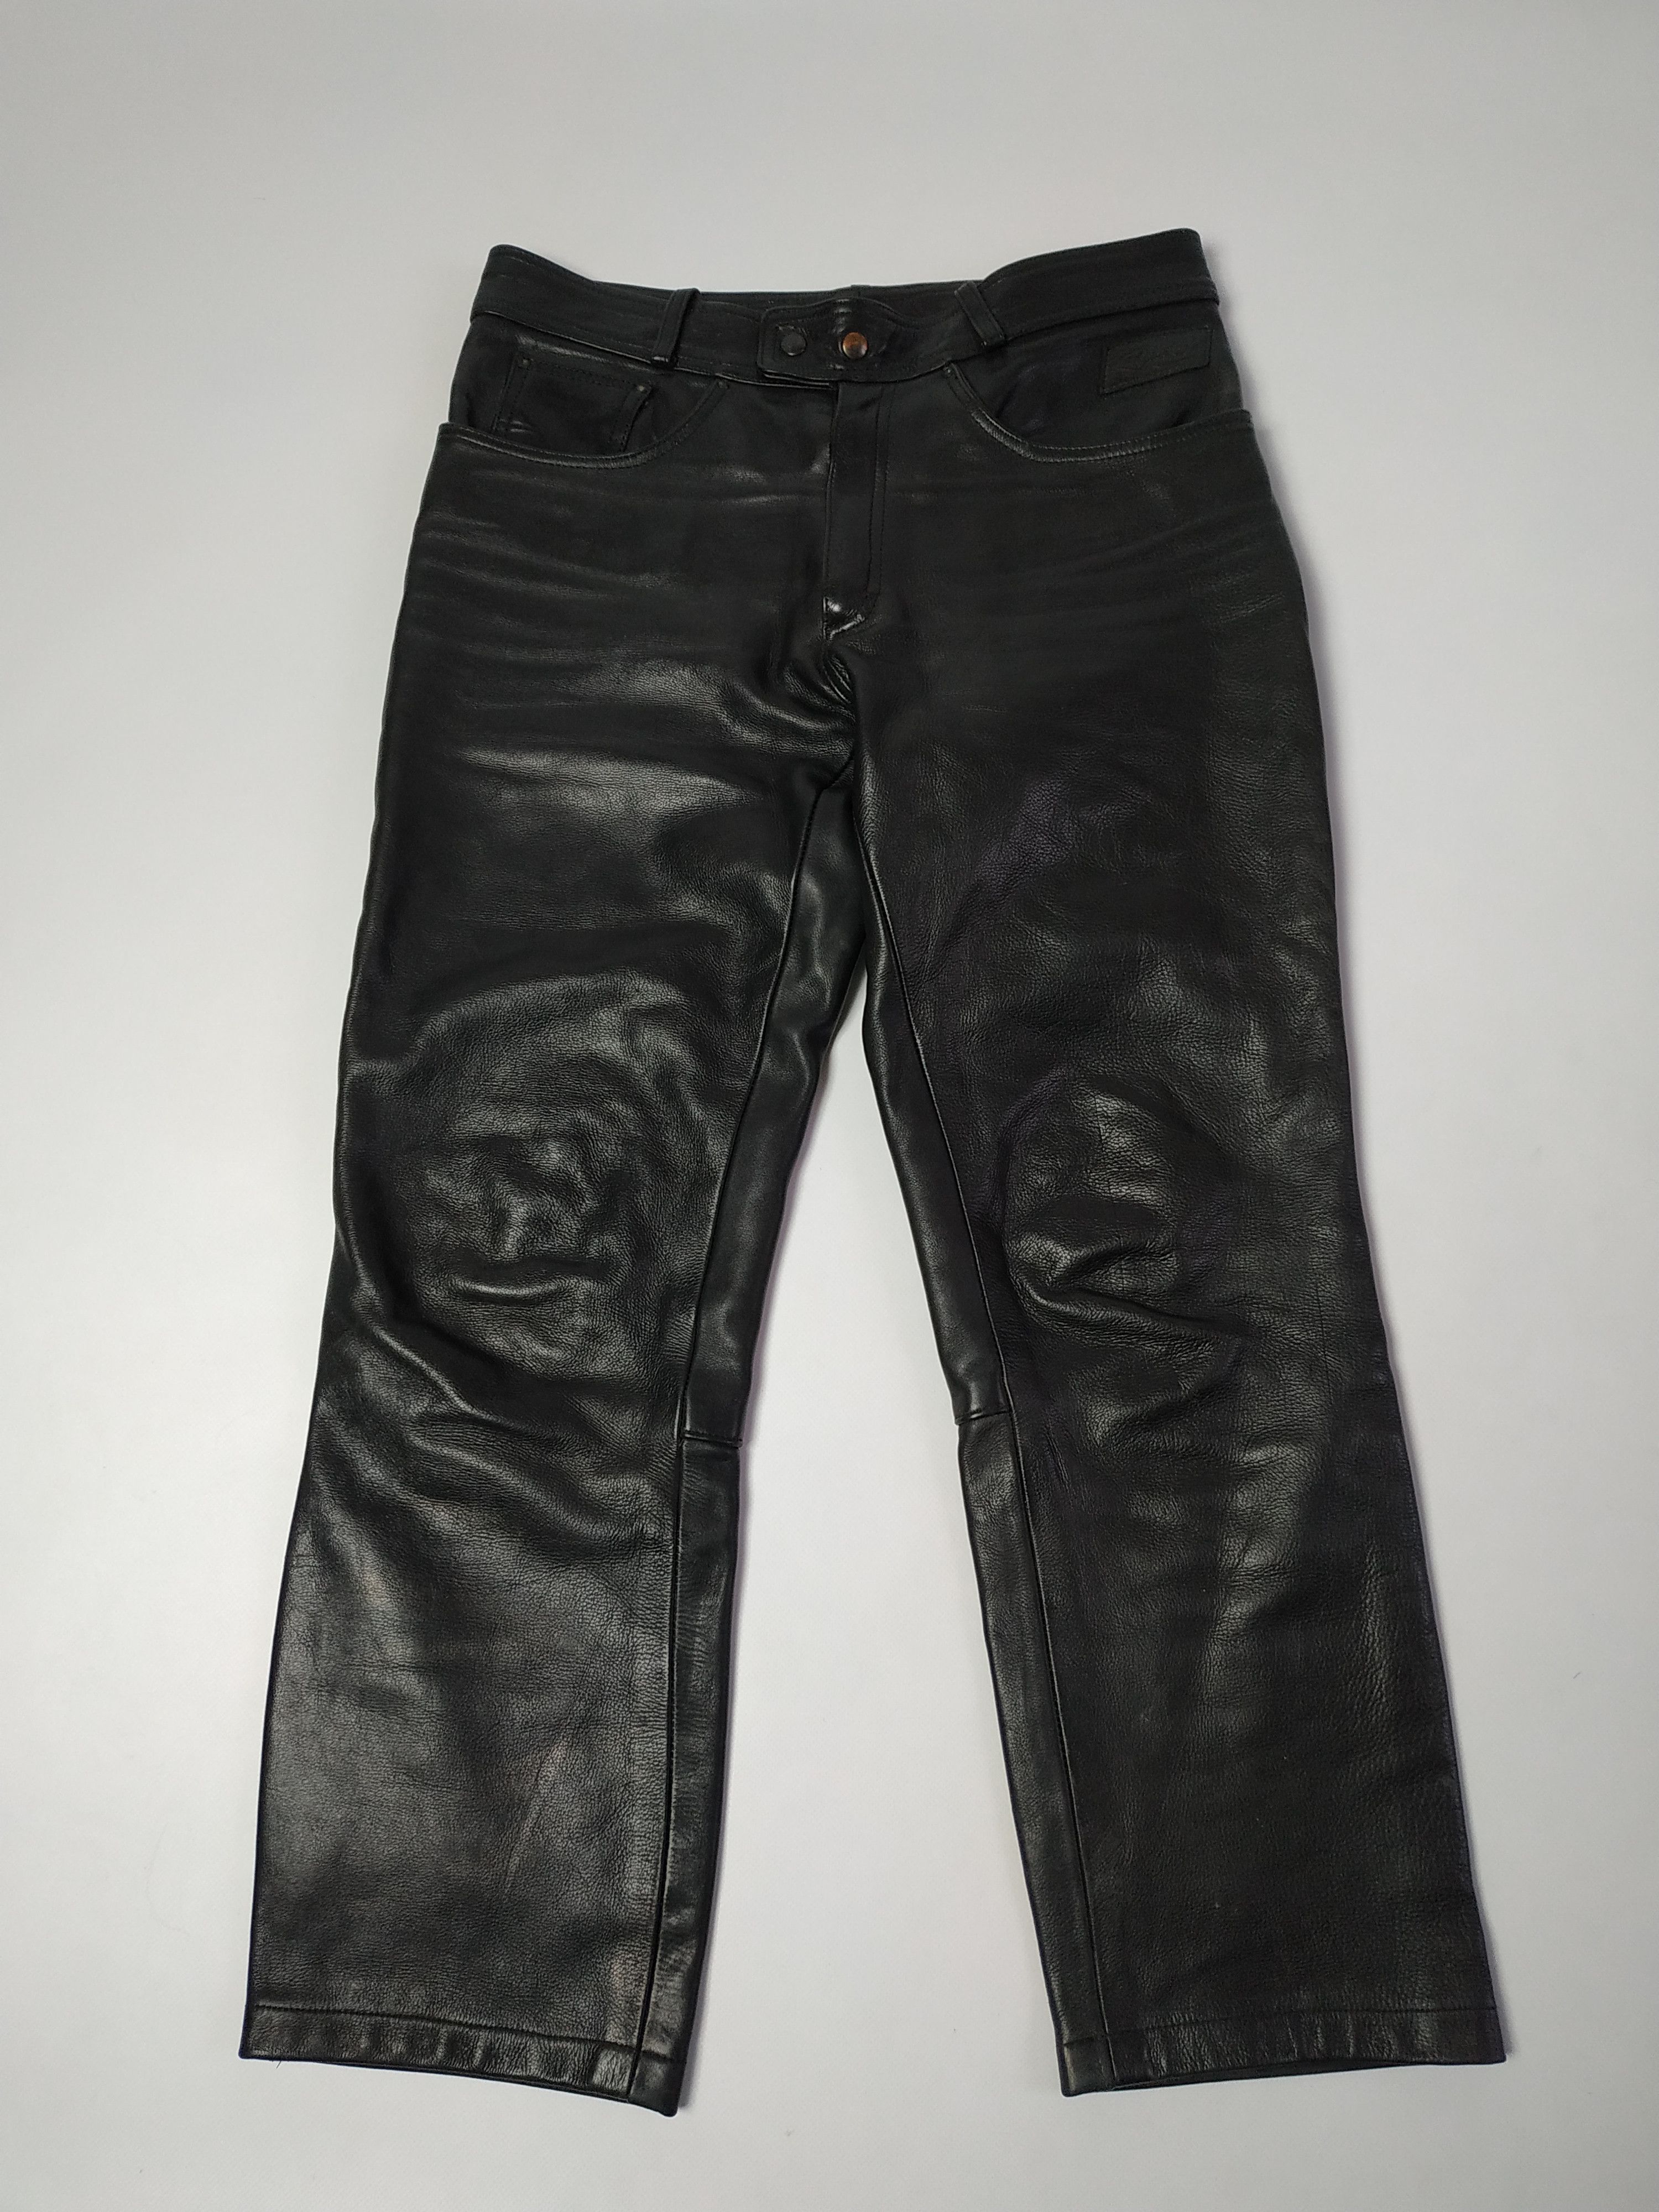 Vintage Vintage MOP leather pants | Grailed